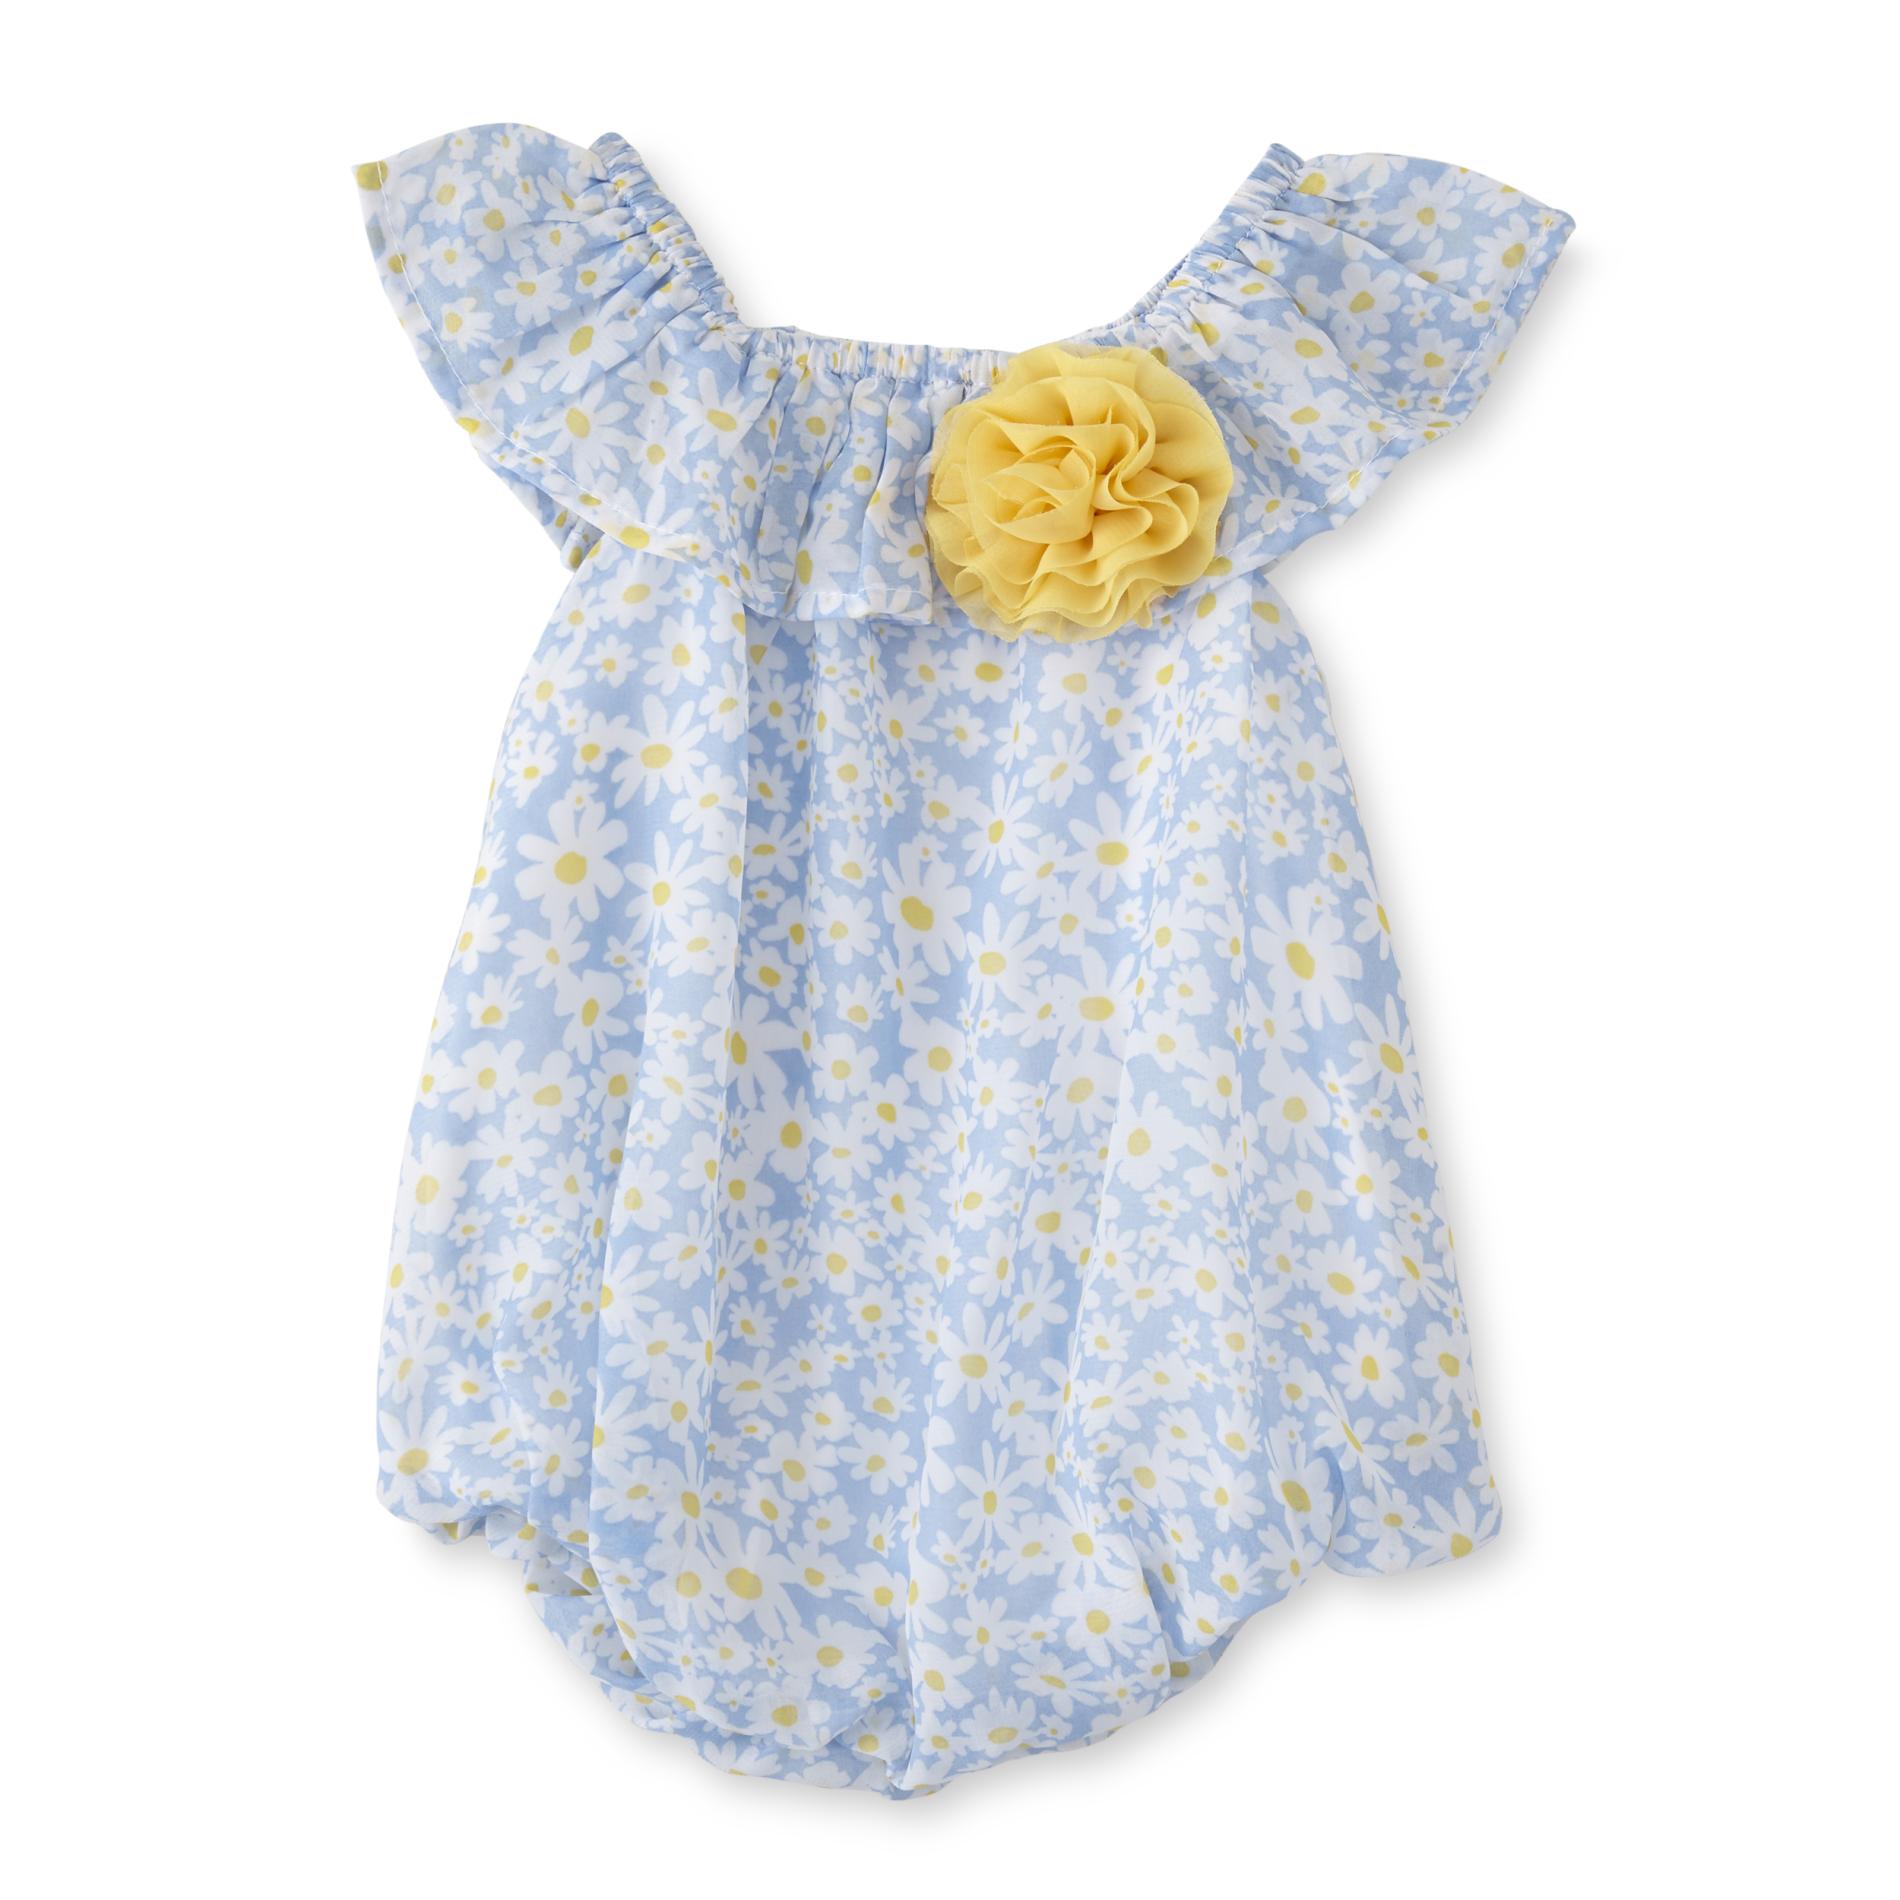 Baby Essentials Infant Girls' Romper - Floral